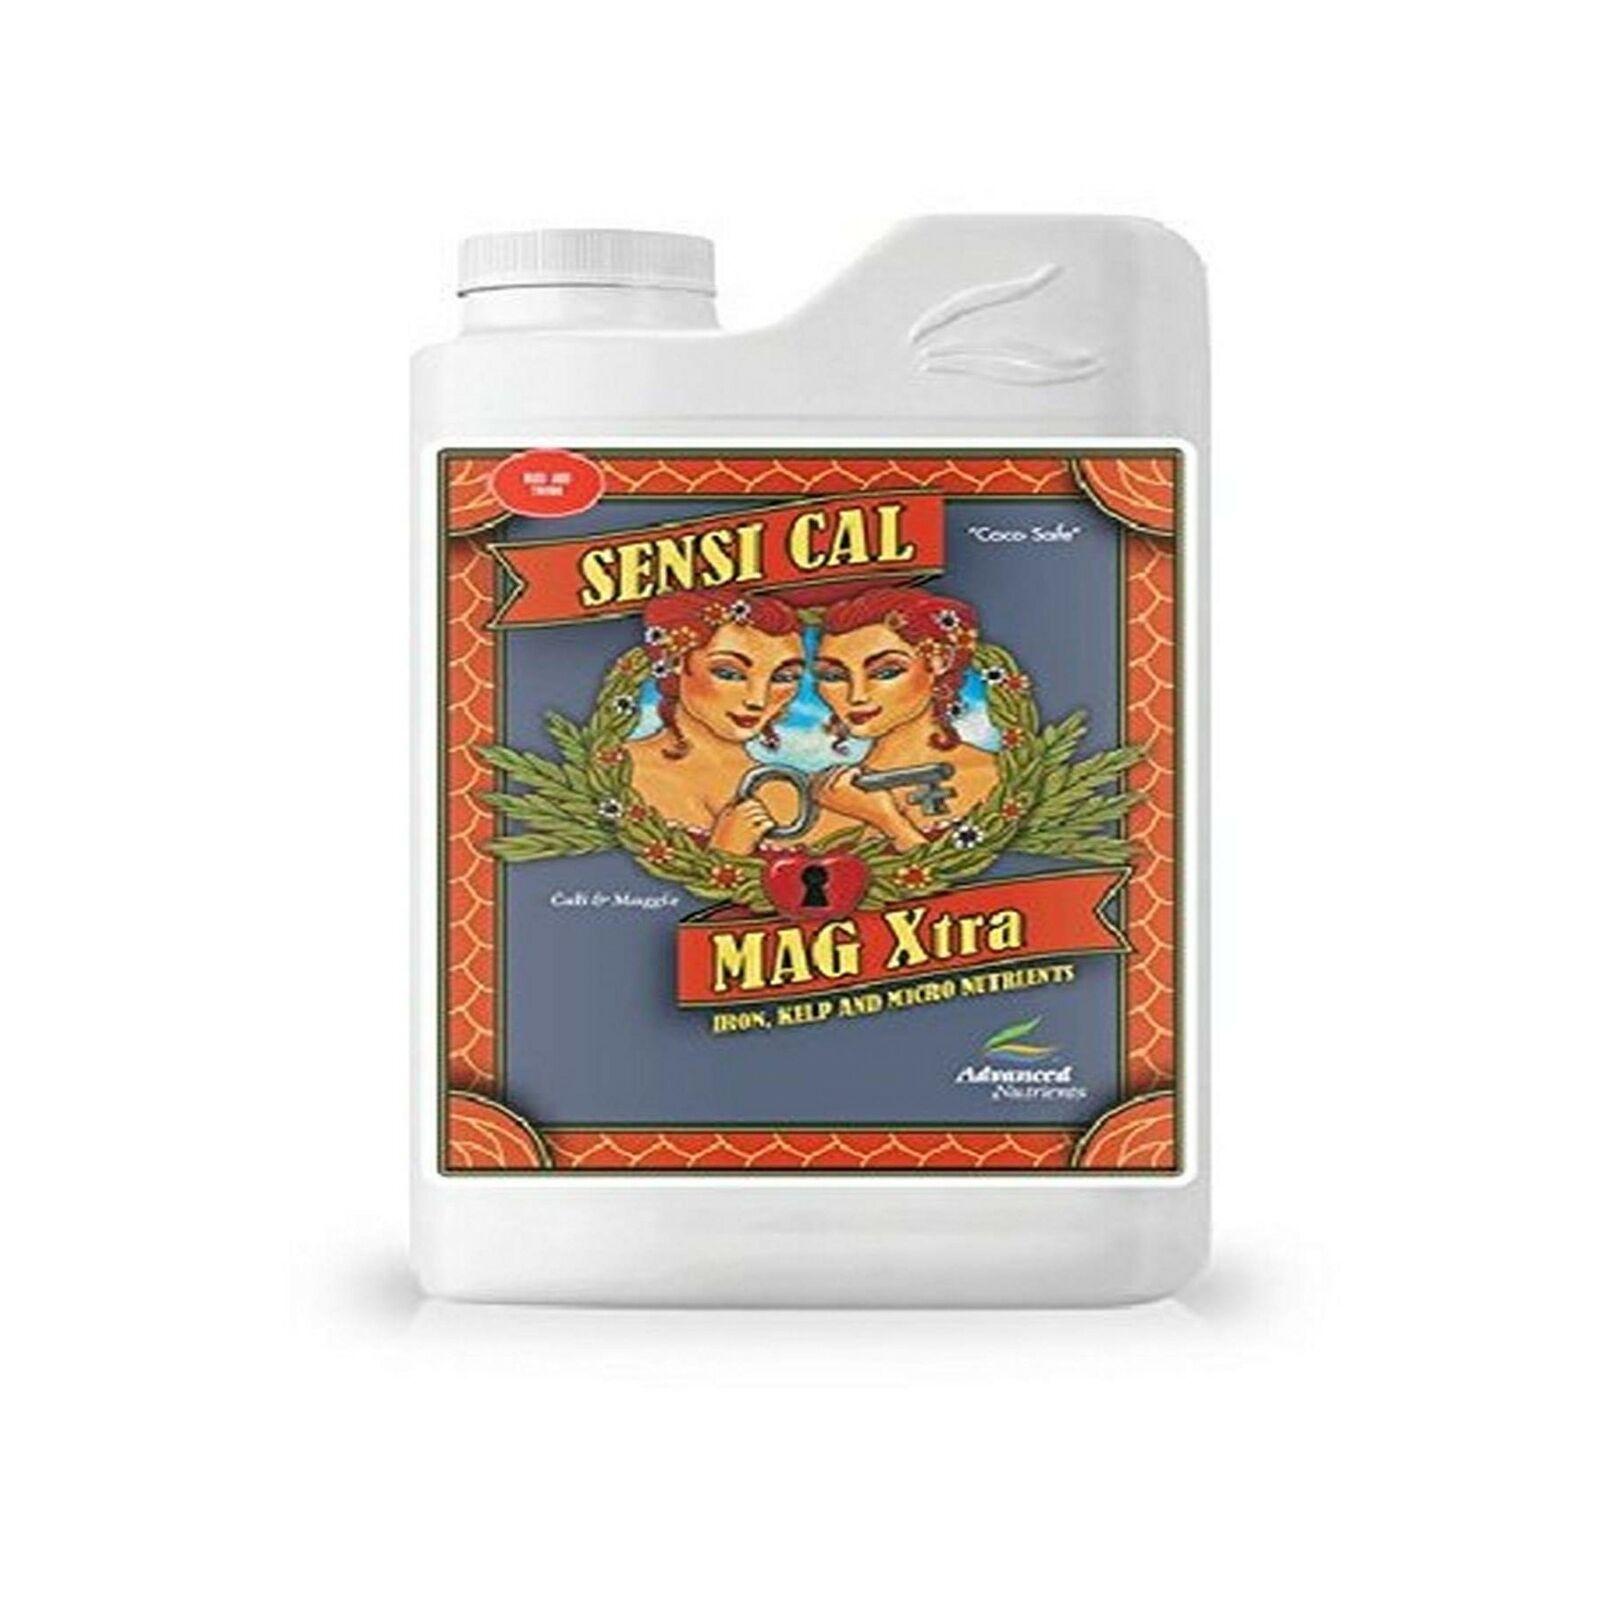 3 Pack, Advanced Nutrients 6360-14 Sensi Cal Mag Xtra, 1 Liter